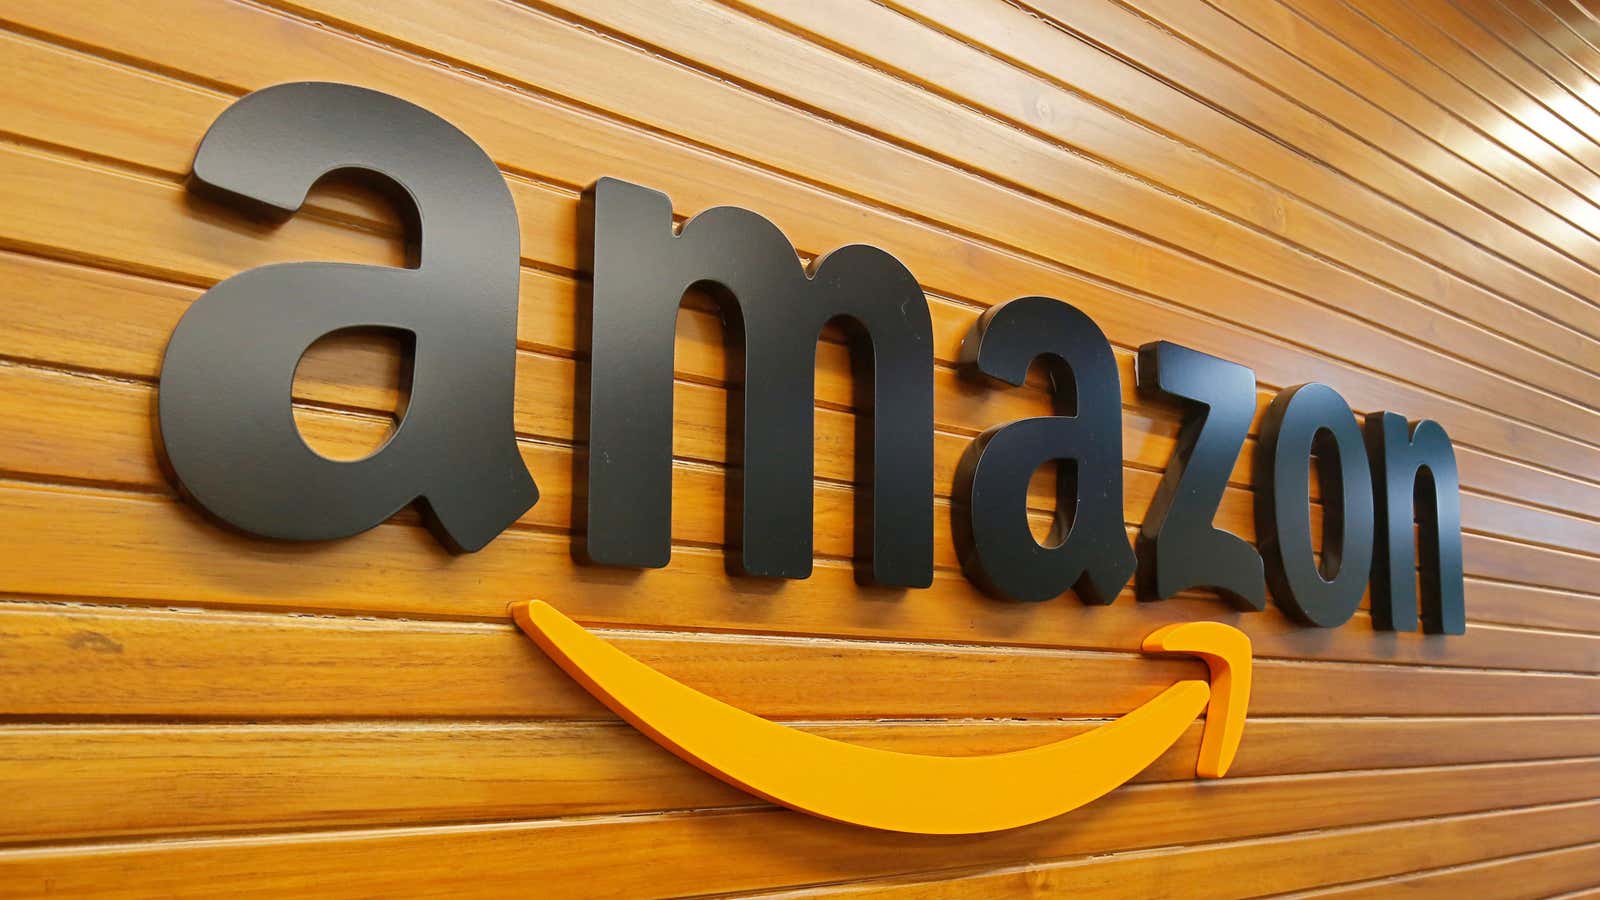 What will Amazon acquire next?